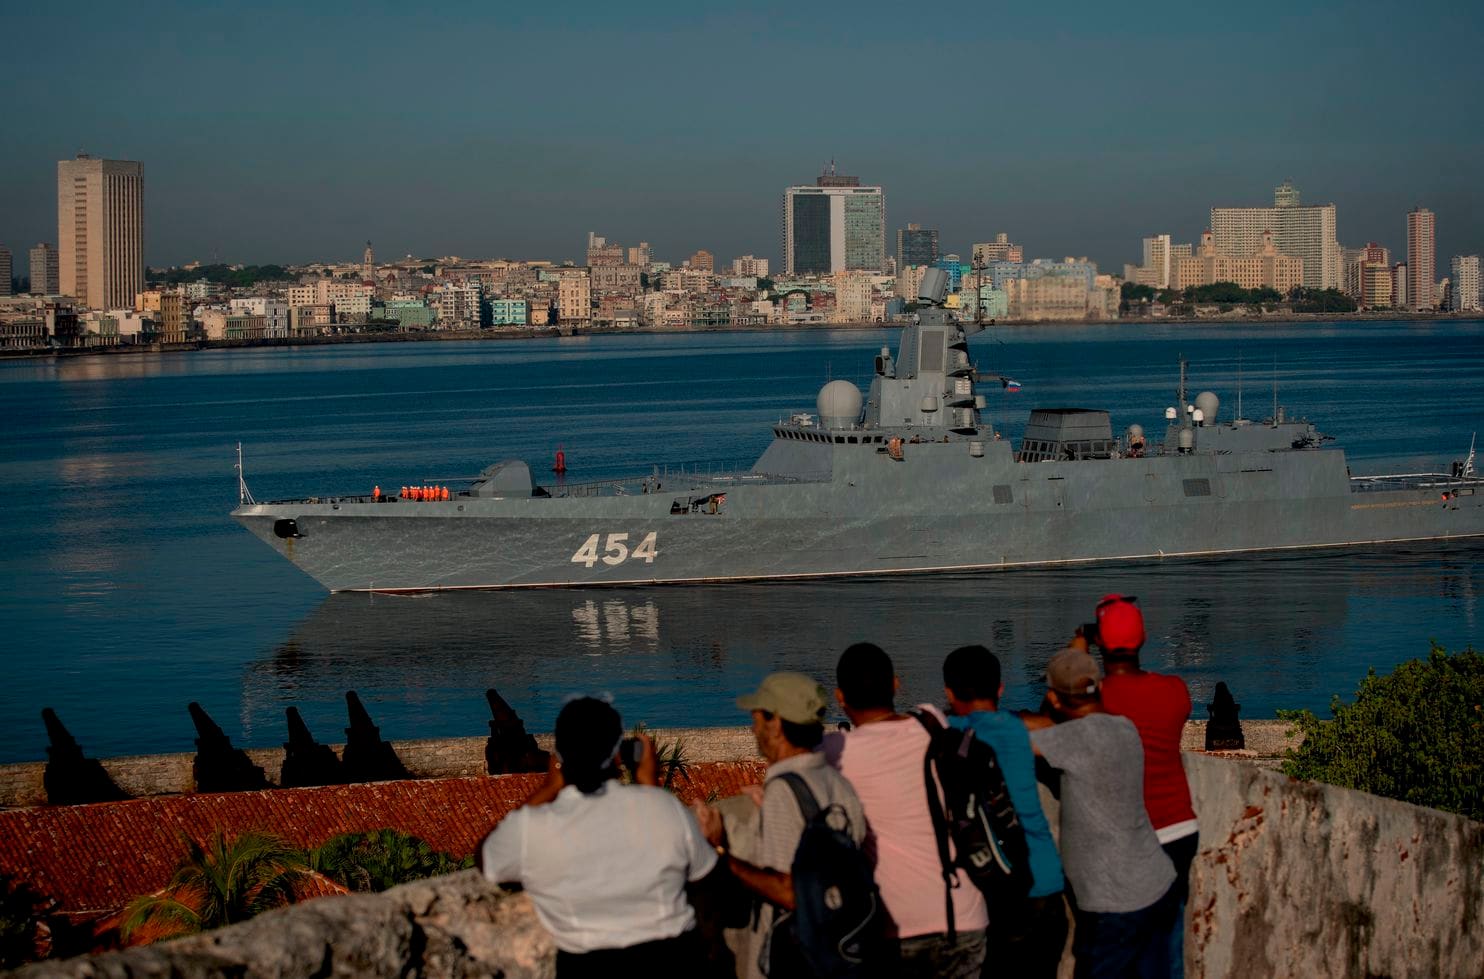 Russian Navy Admiral Gorshkov frigate arrives at the port of Havana, Cuba, 